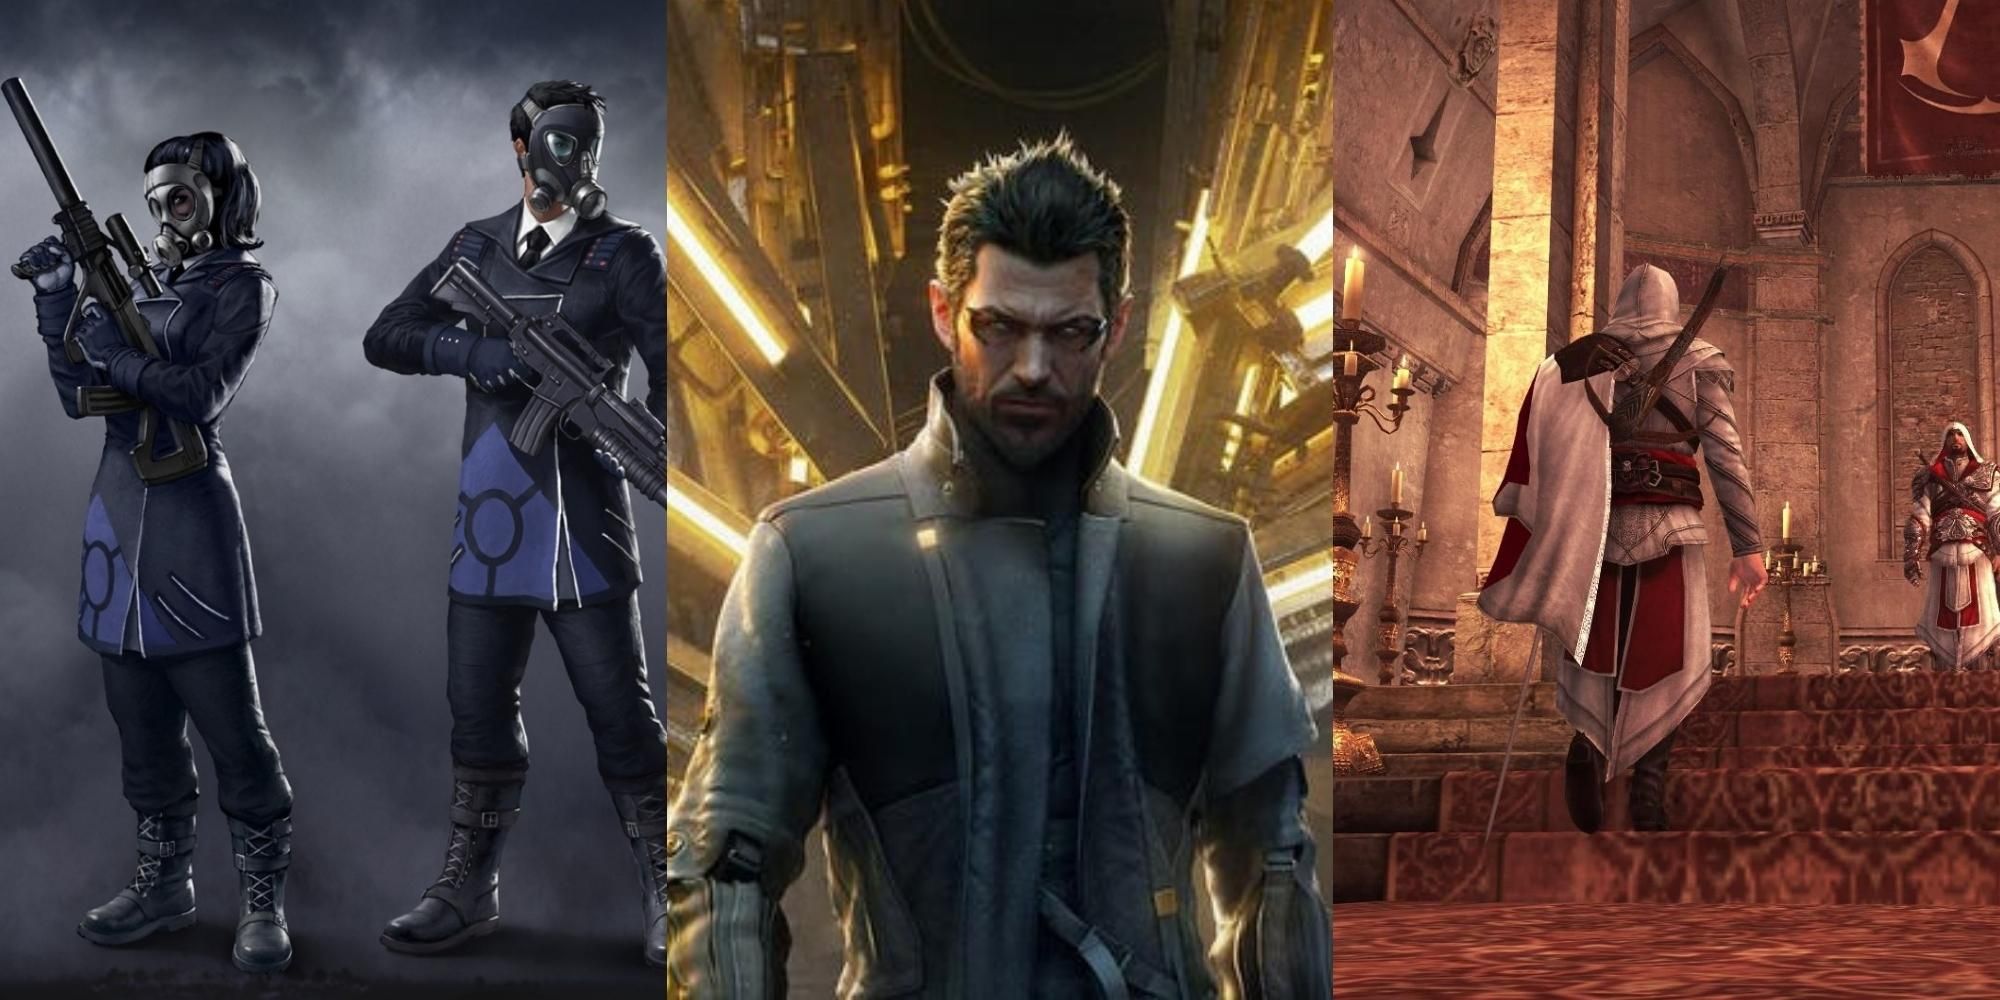 Illuminati members in The Secret World, Adam in Deus Ex, members of The Assassin Order in Assassin’s Creed